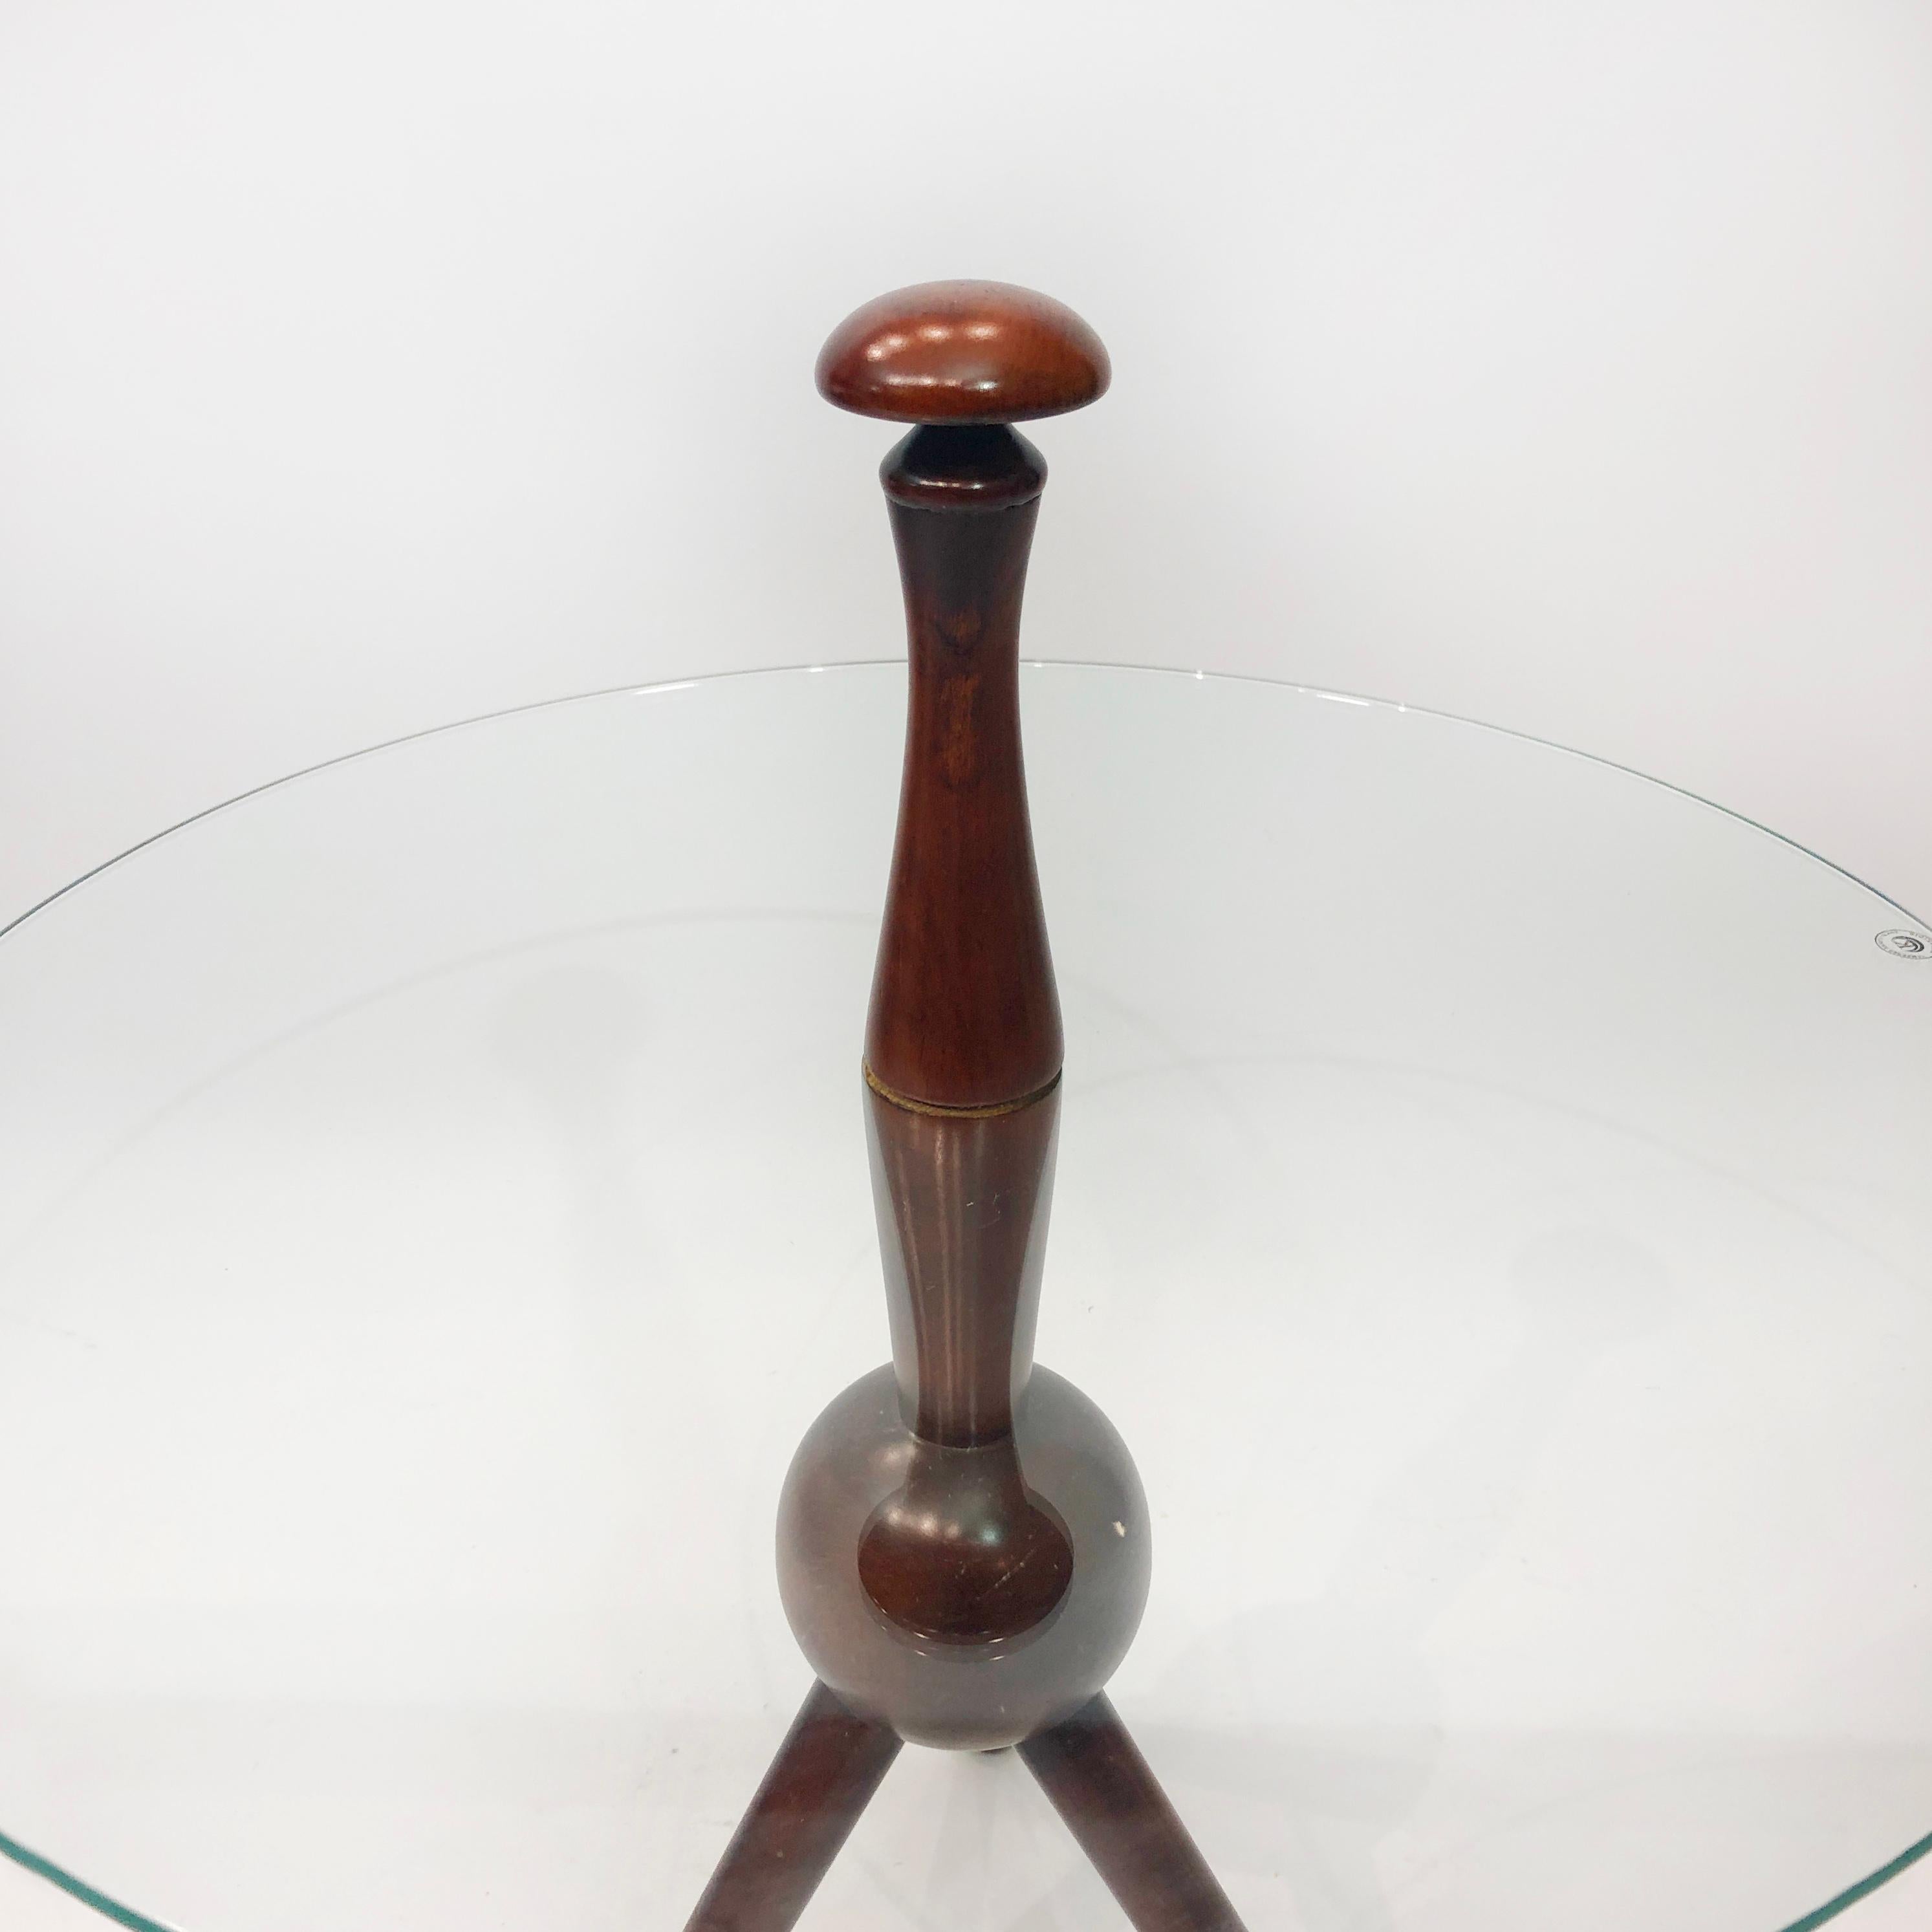 Mid-20th Century Cesare Lacca Tripod Side Table #1 1950s Midcentury Italian Vintage Wood Glass